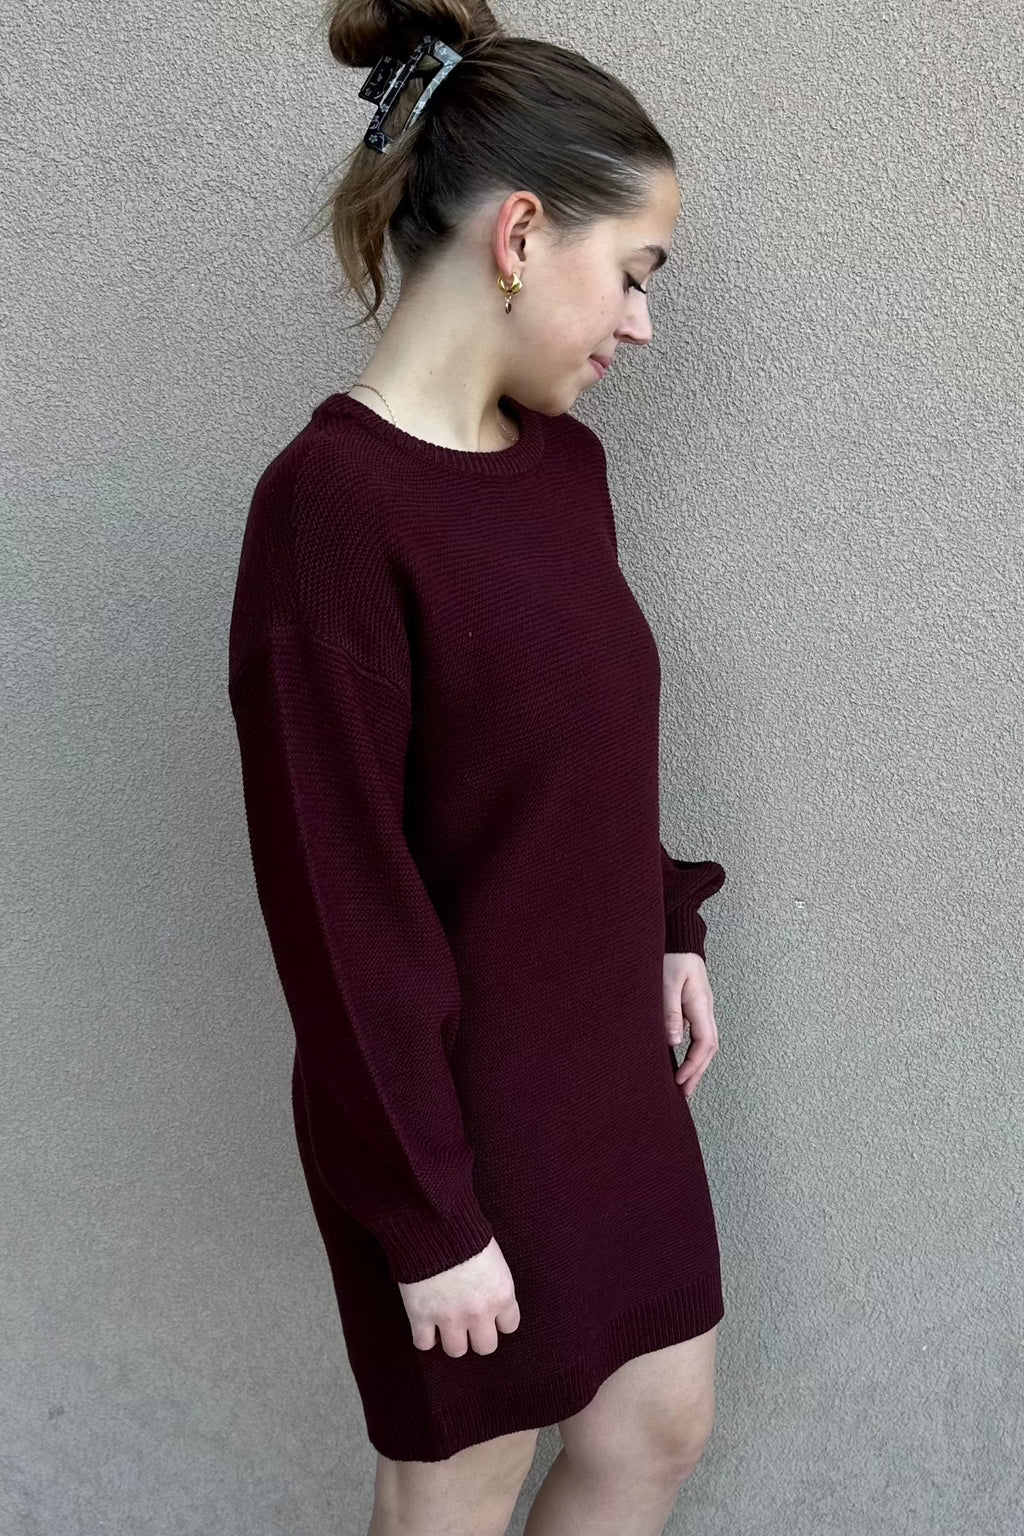 Zara Sweater Dress - RD Style